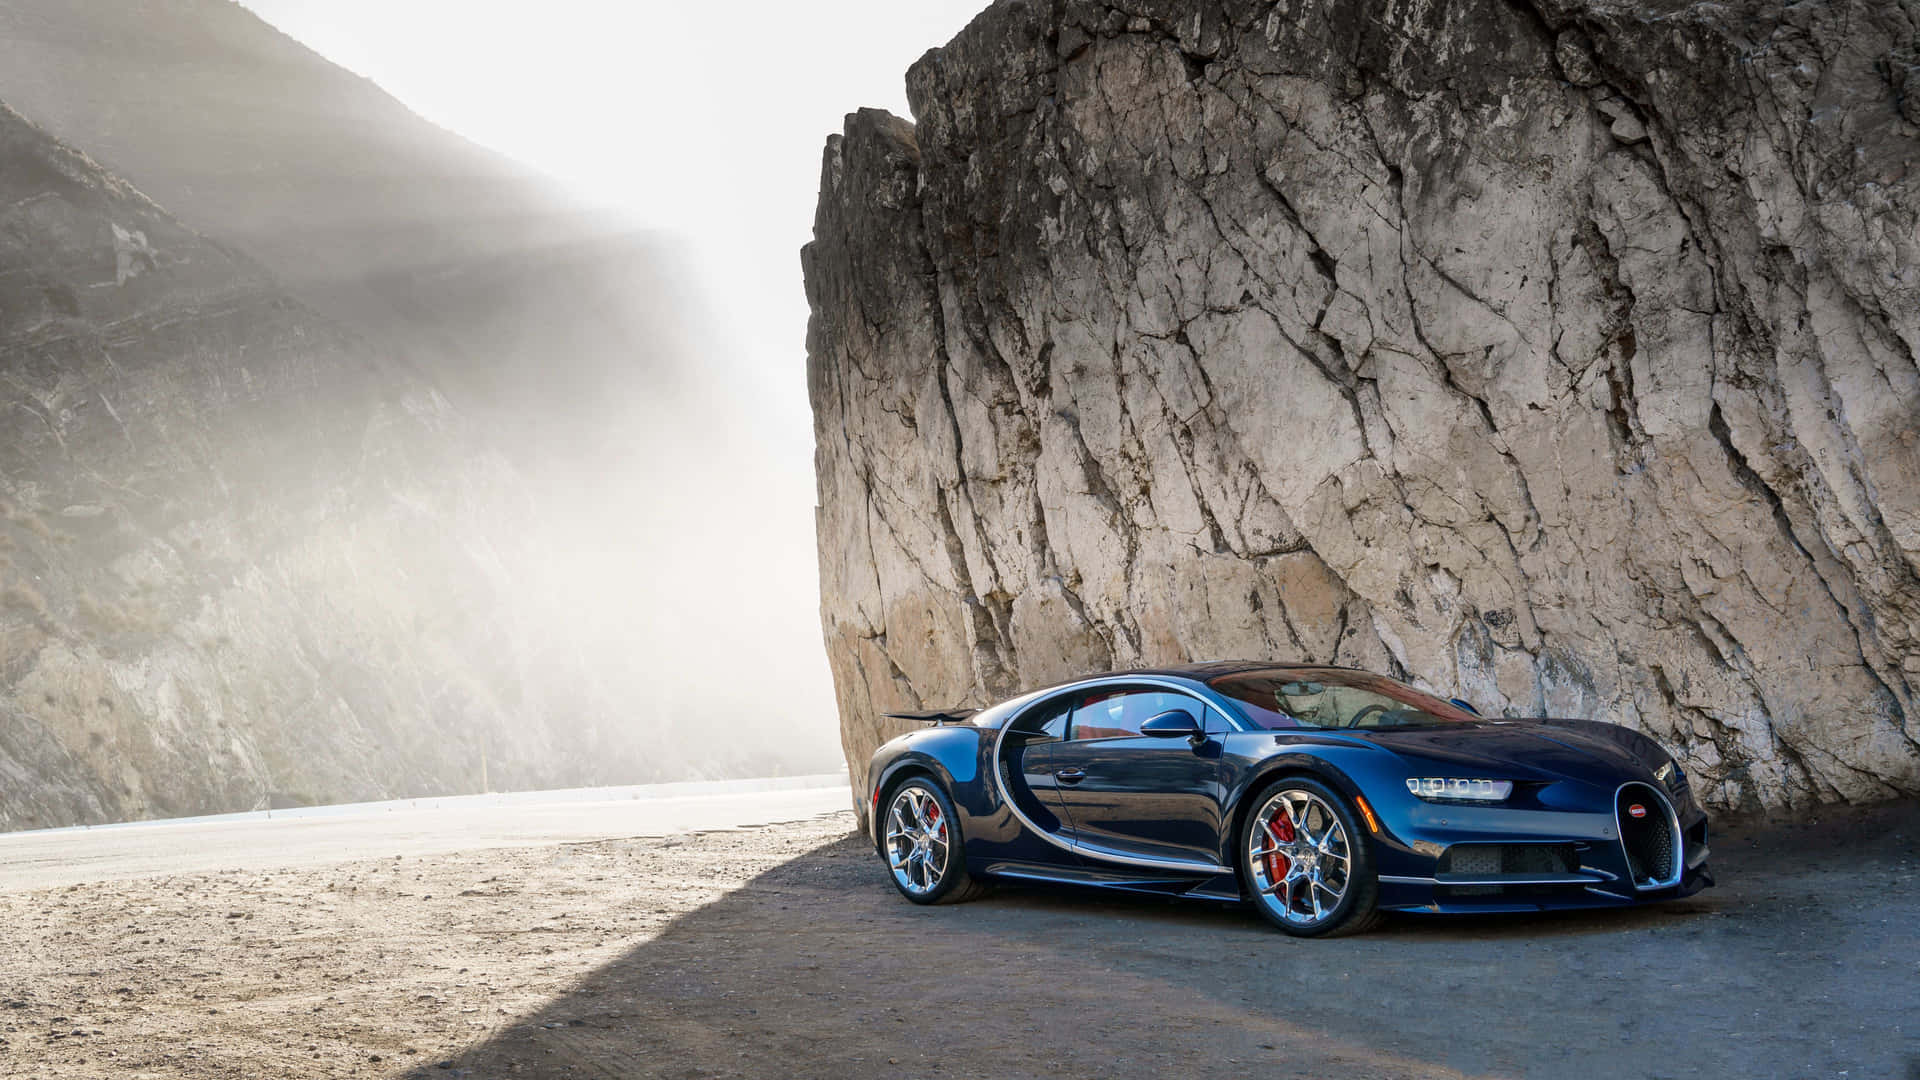 The Luxury of Speed - The Bugatti 4k Wallpaper